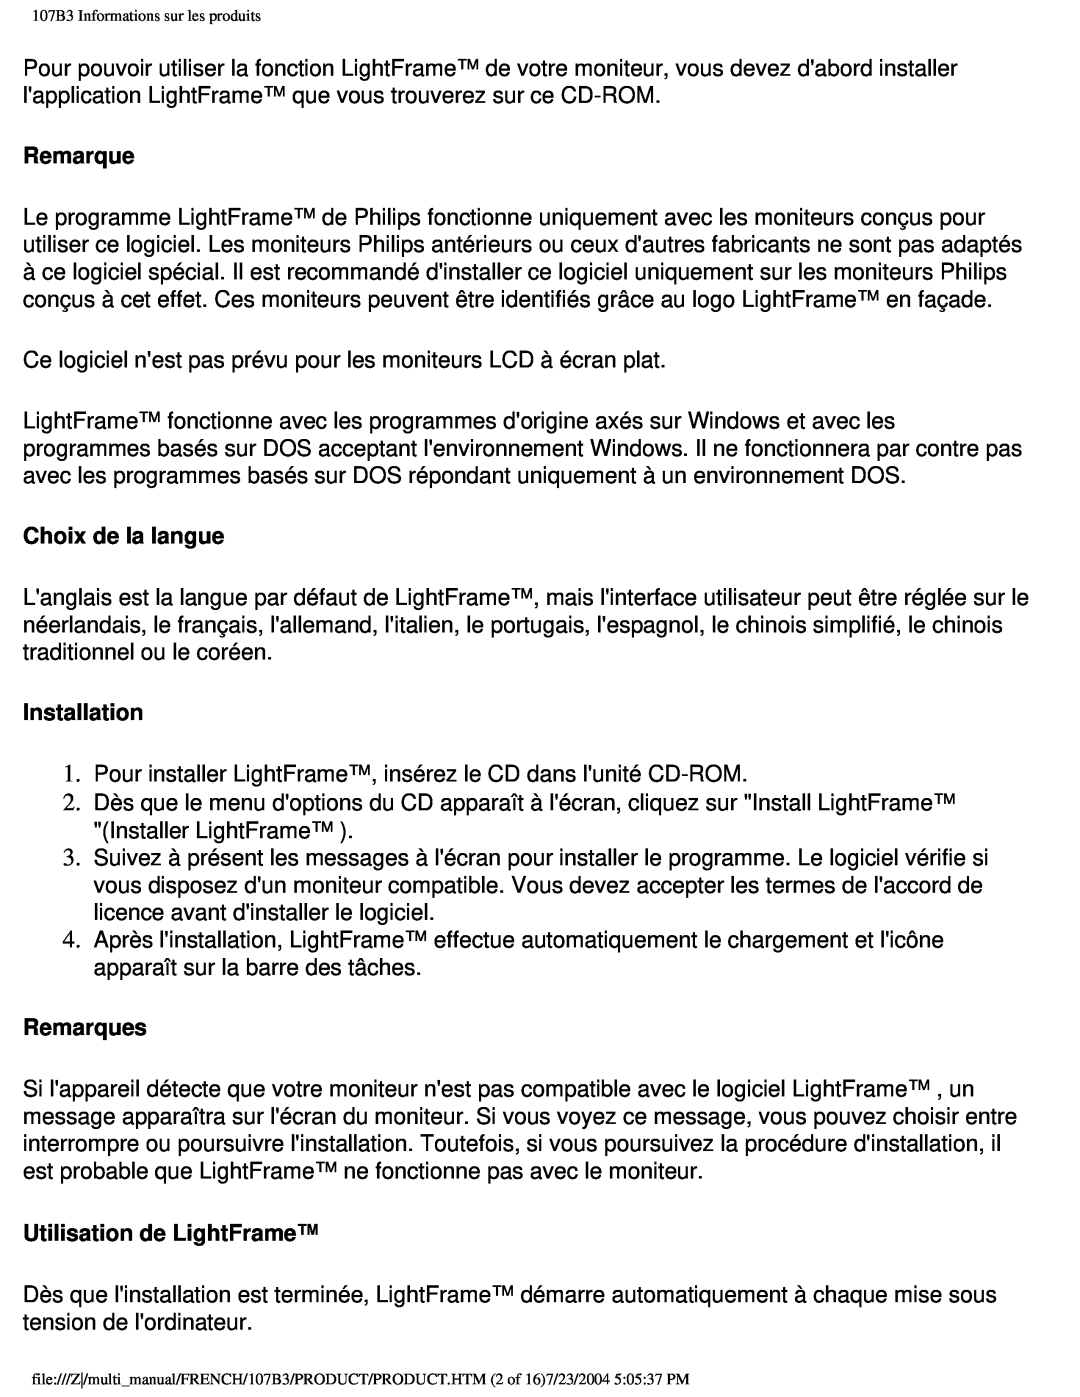 Philips 107B3 user manual Choix de la langue, Installation, Remarques, Utilisation de LightFrame 